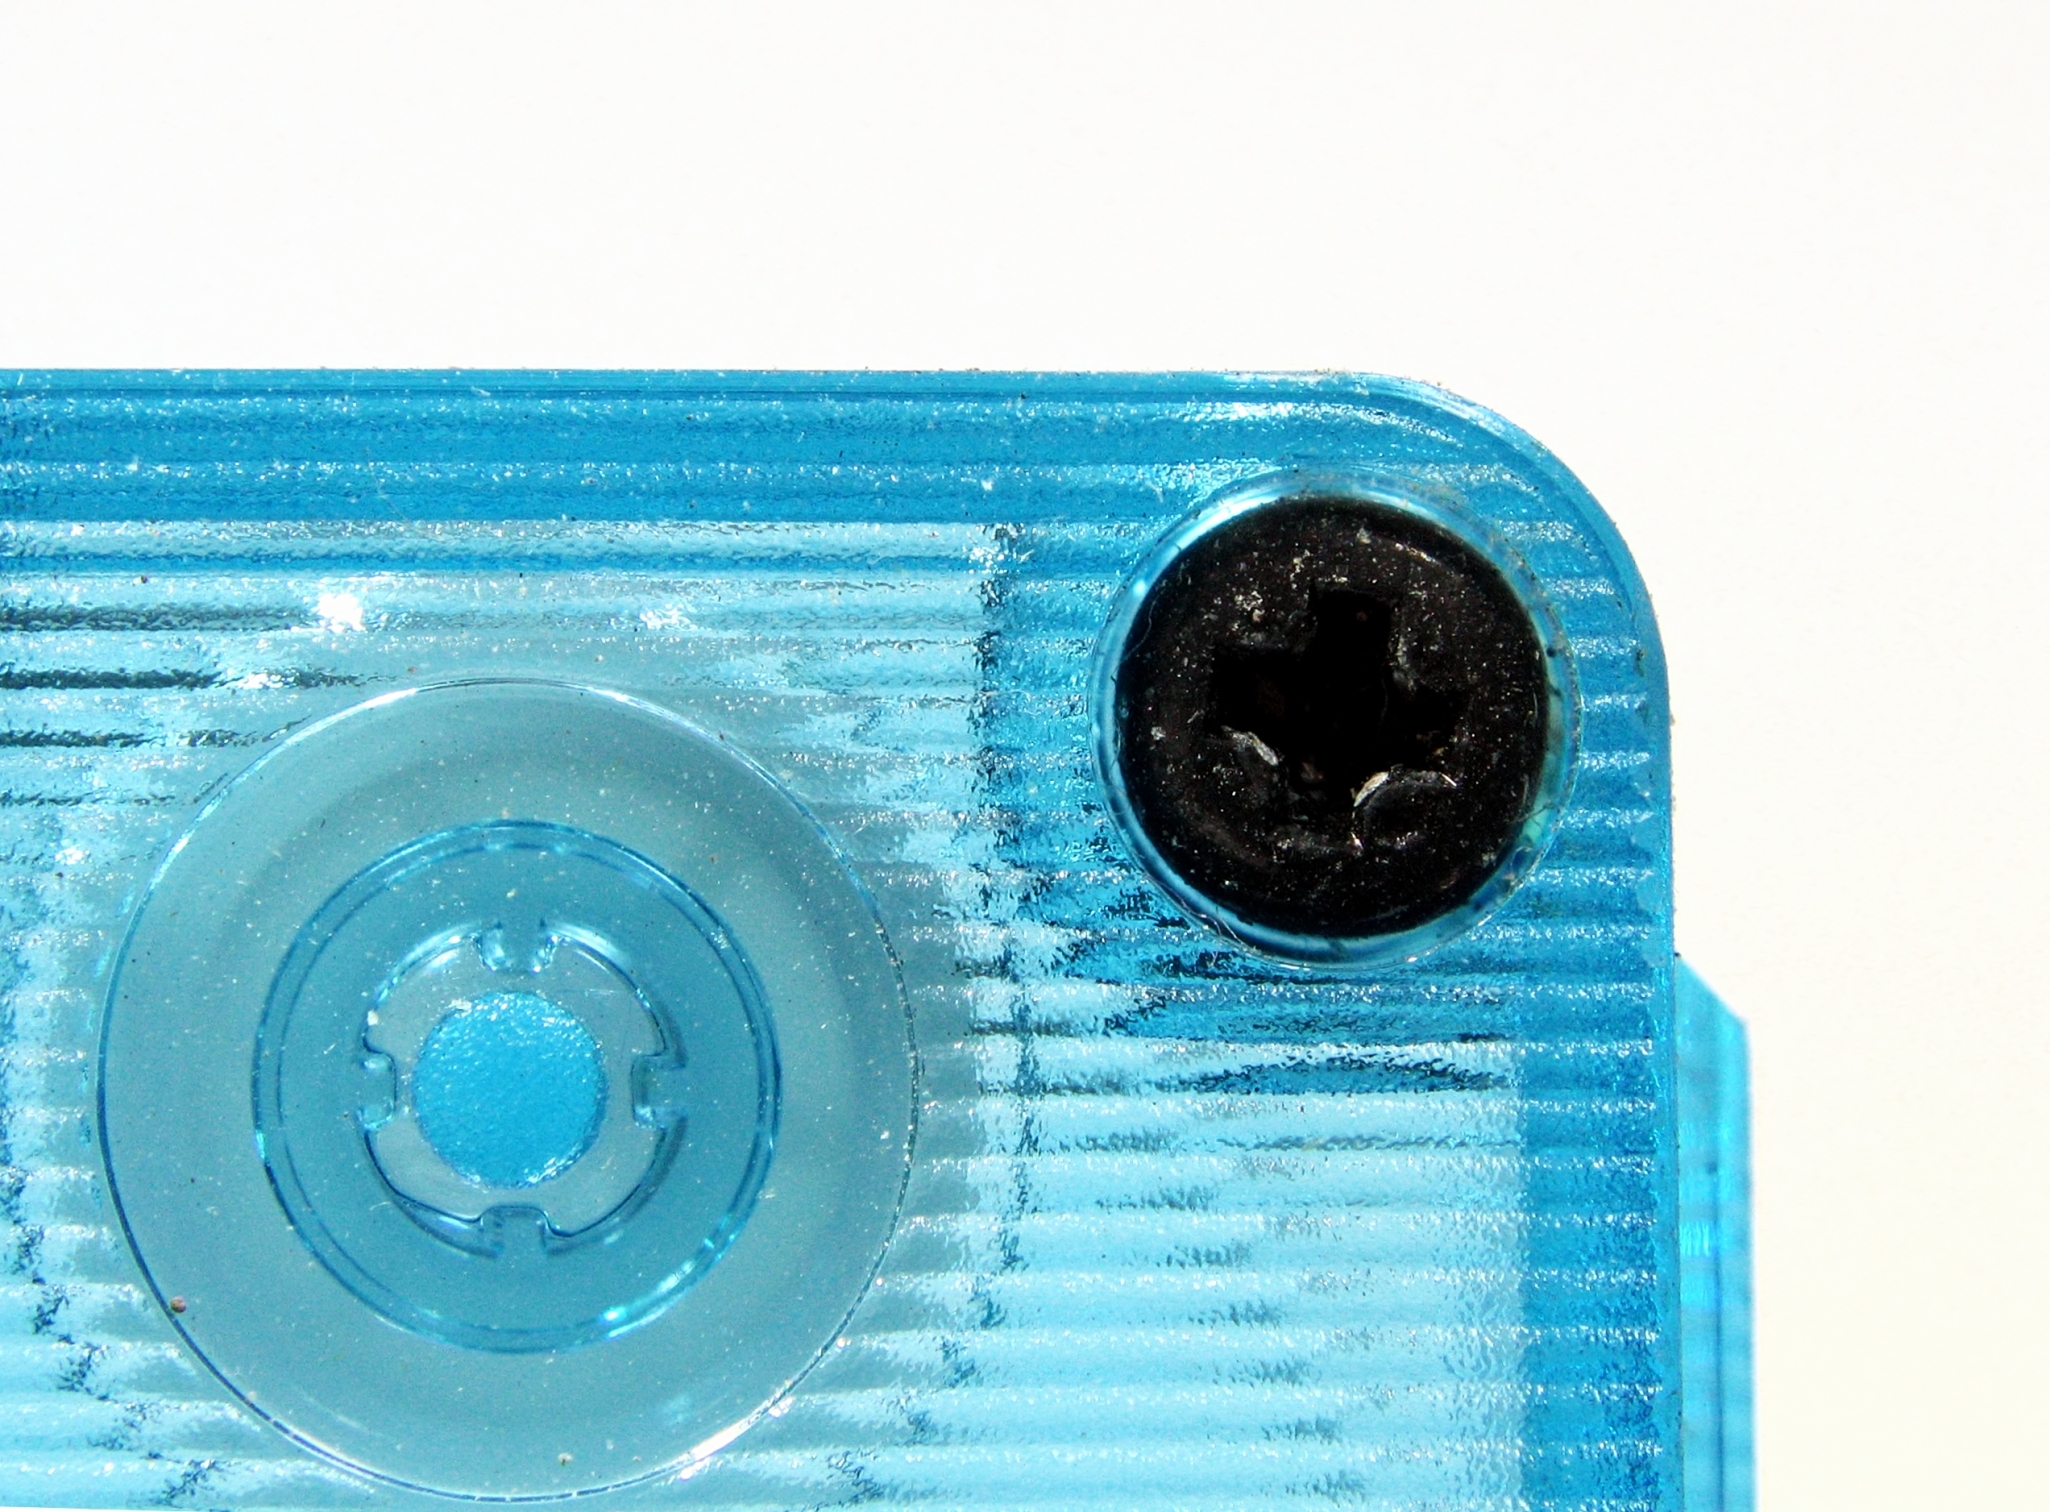 Cassette tape closeup photo